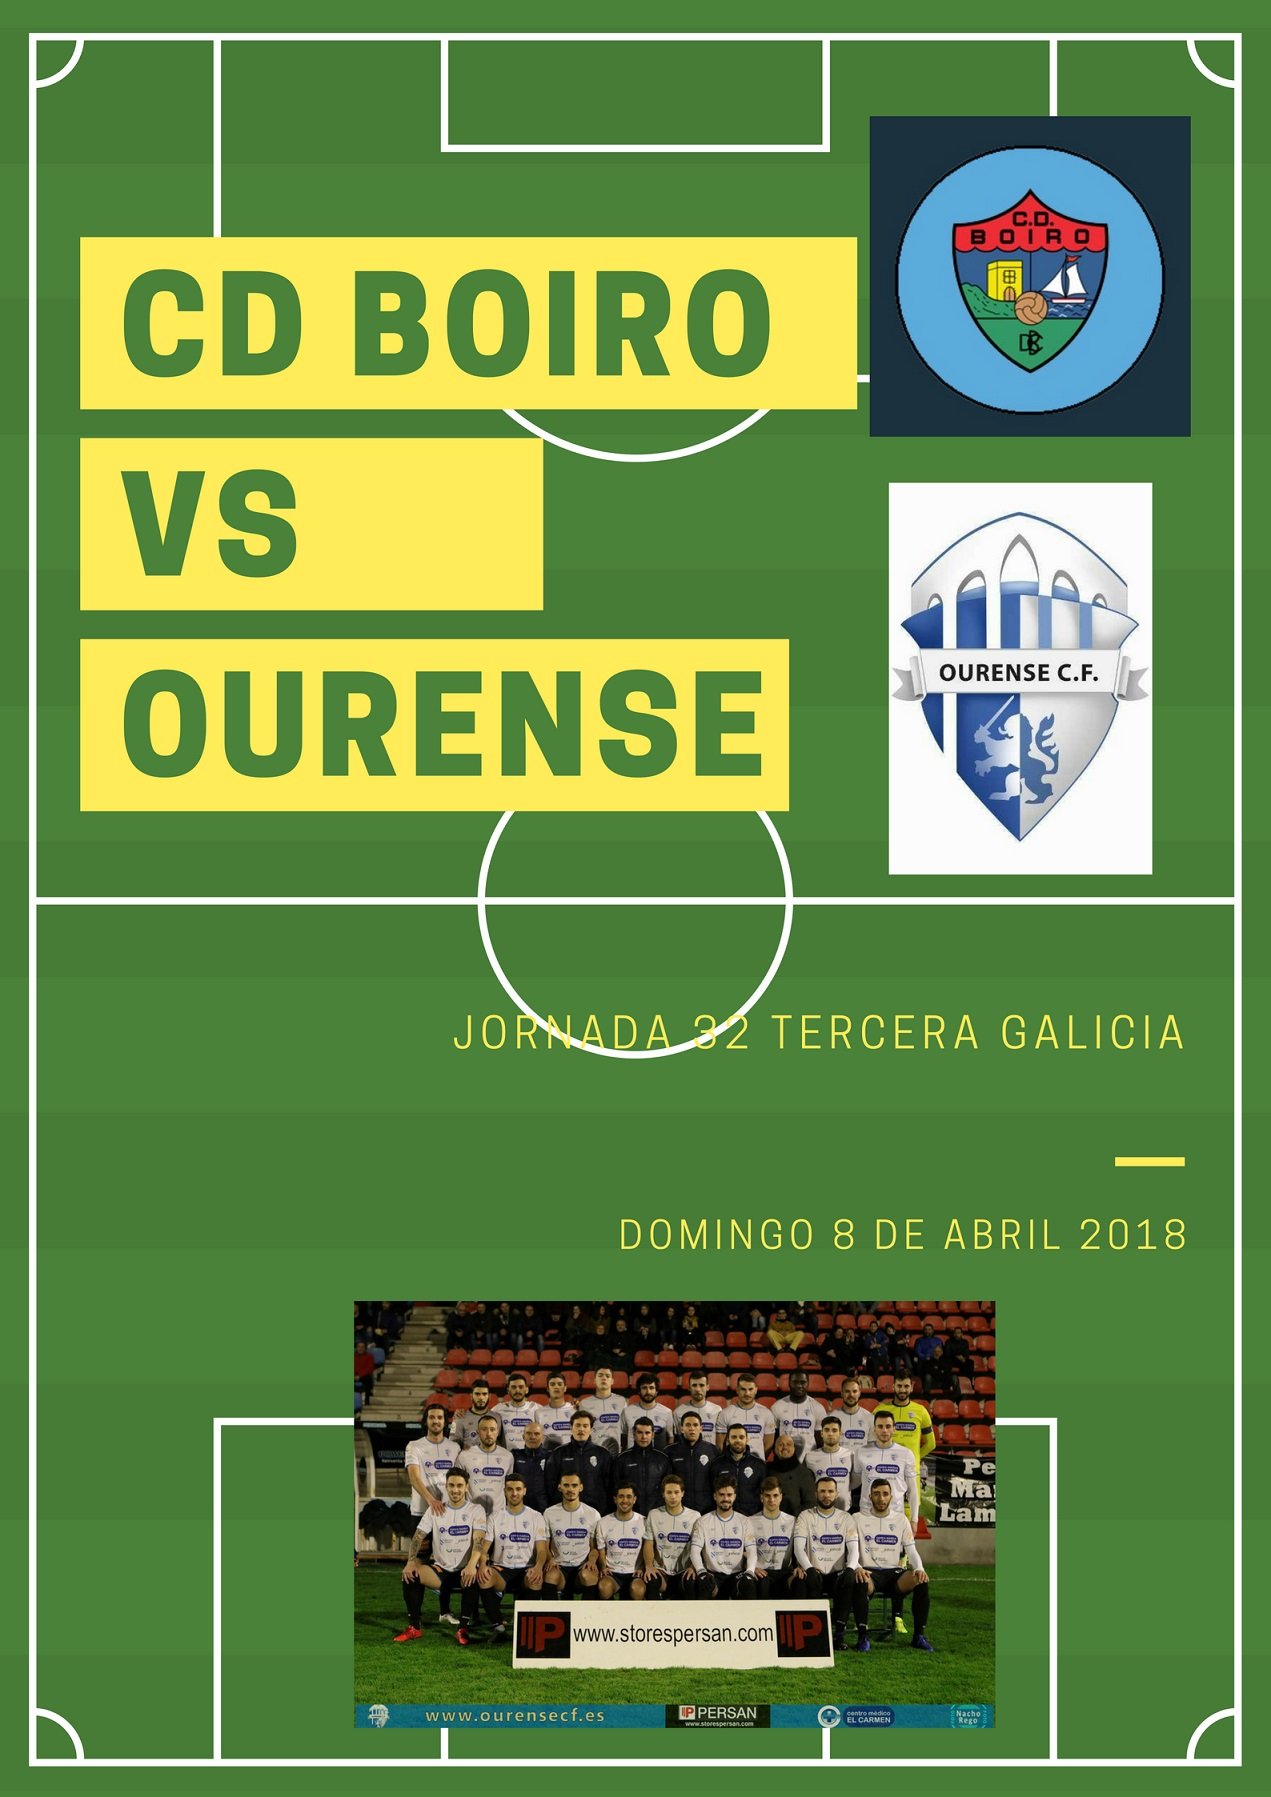 CD Boiro Vs. Ourense CF jornada 32 Tercera Galicia